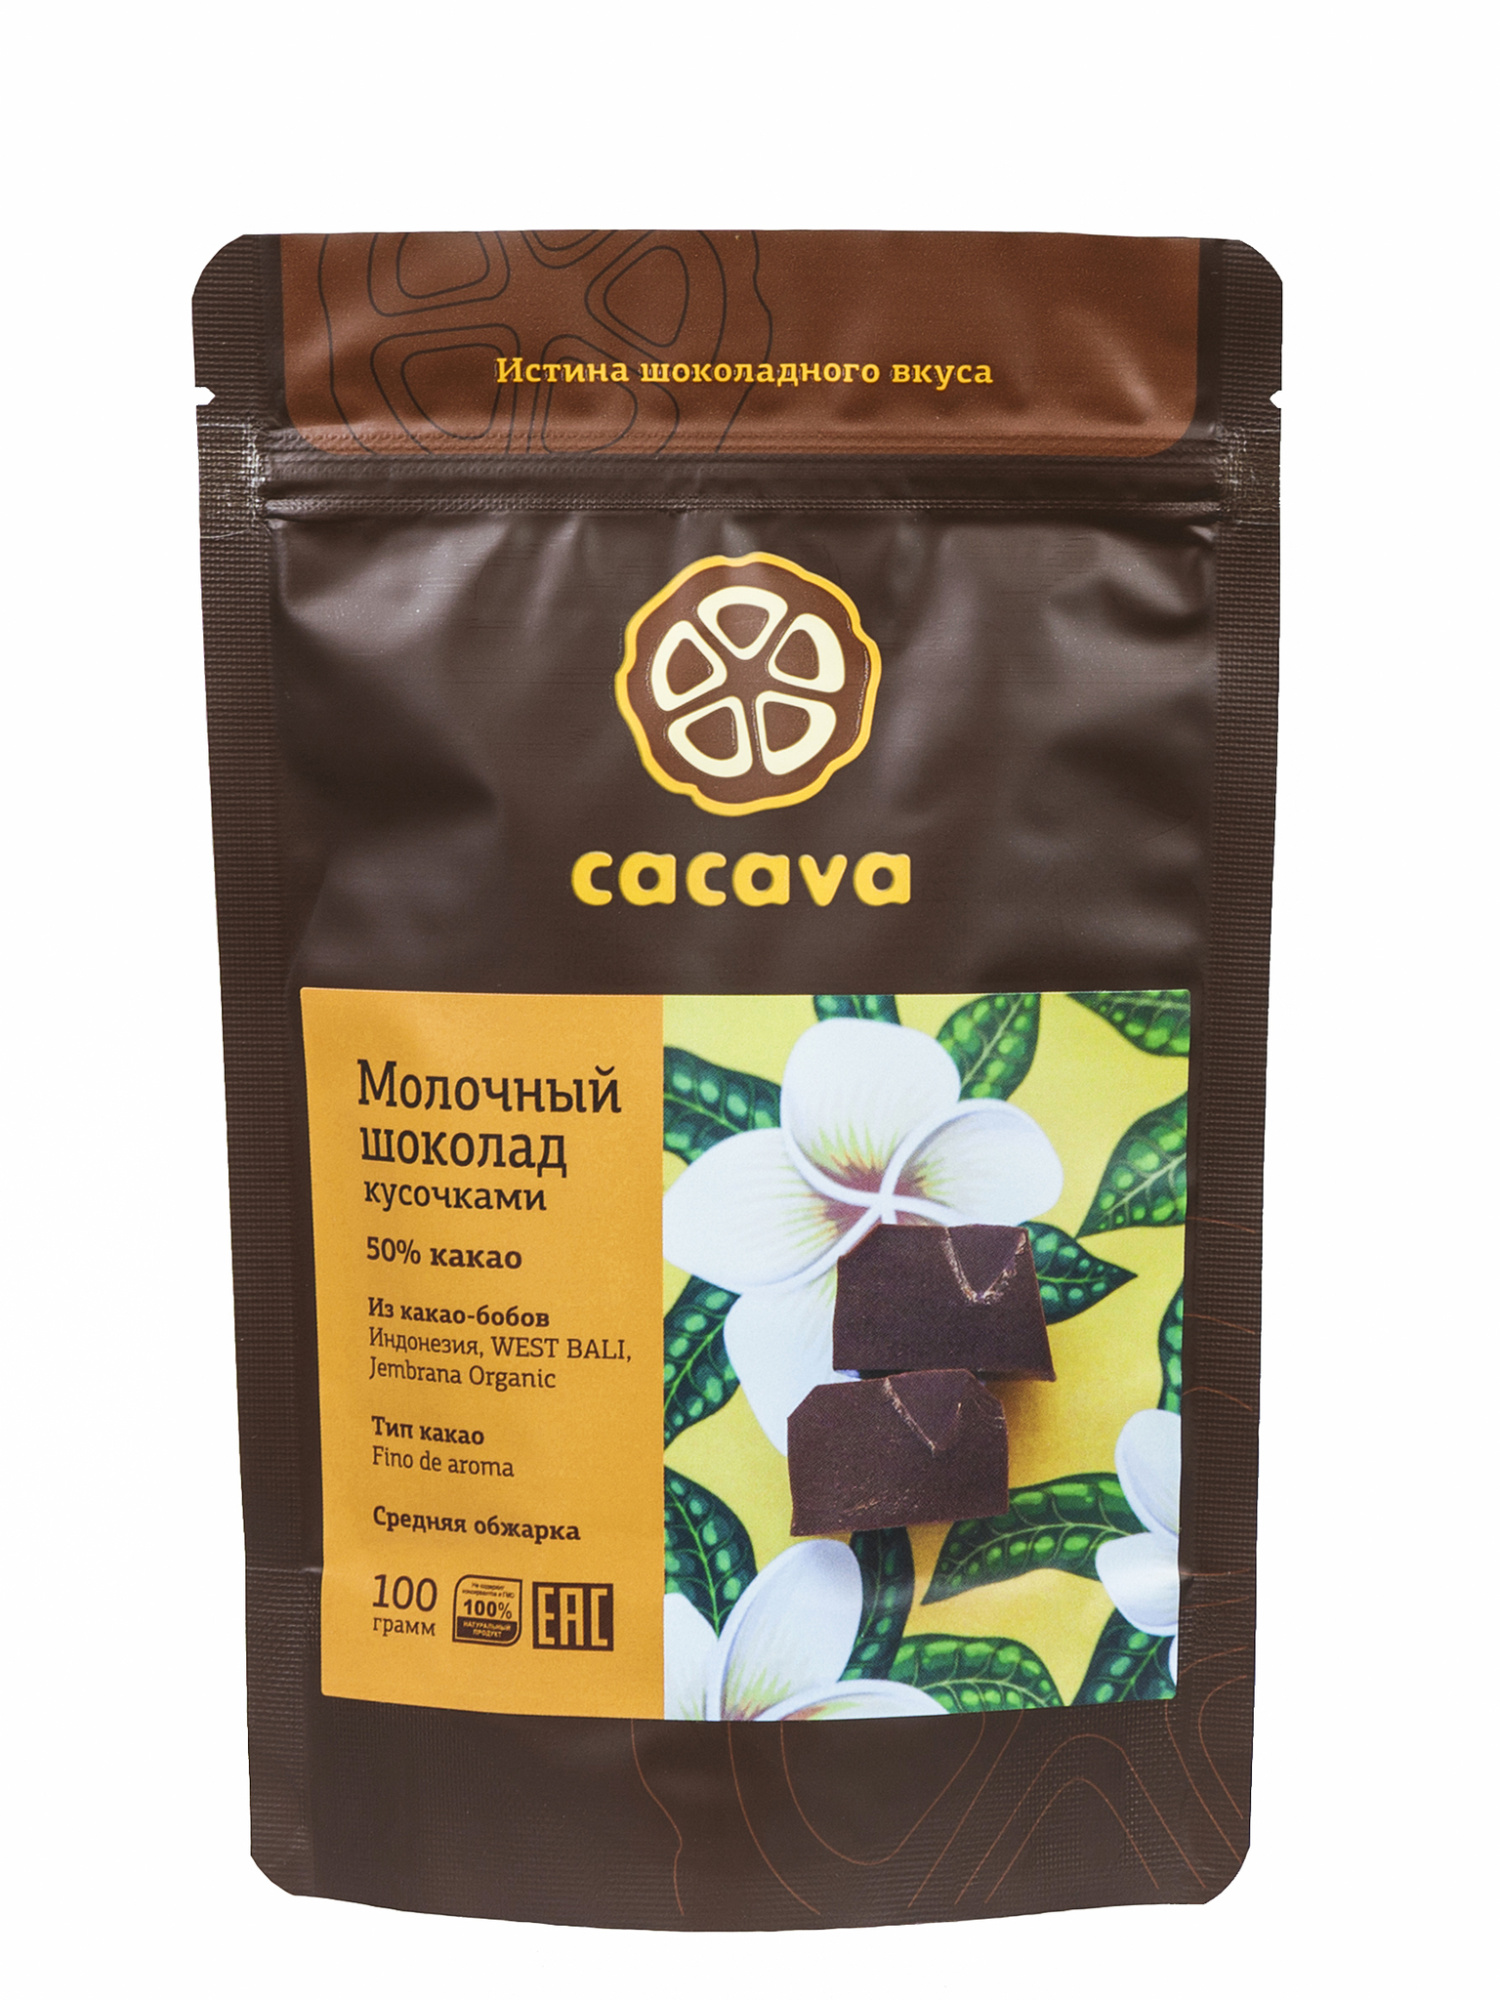 Молочный шоколад 50 % какао (Индонезия, WEST BALI, Jembrana), 100г купить